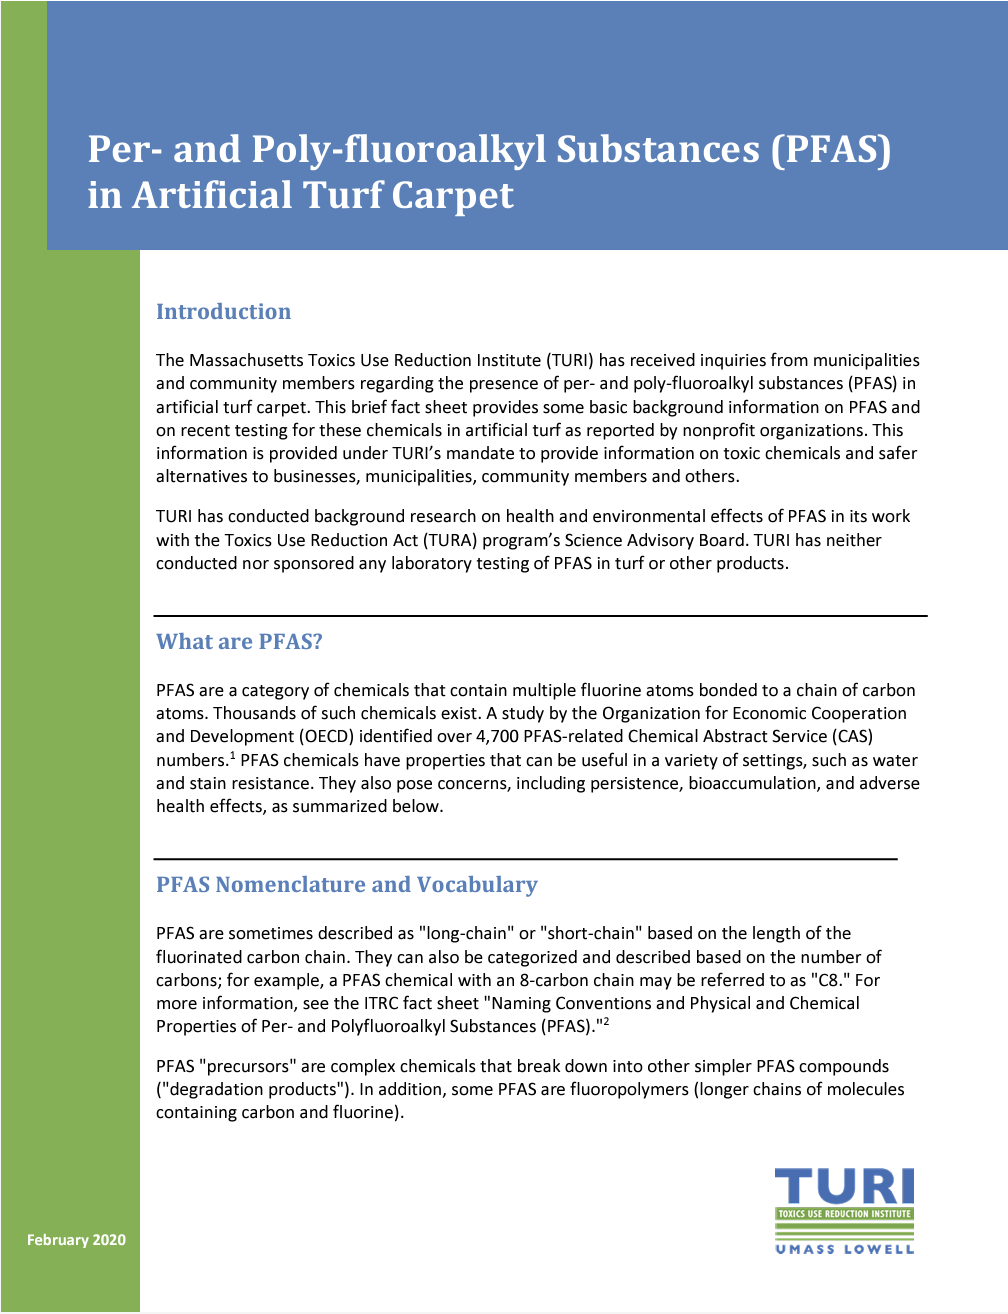 PFAS in Artificial Turf Carpet